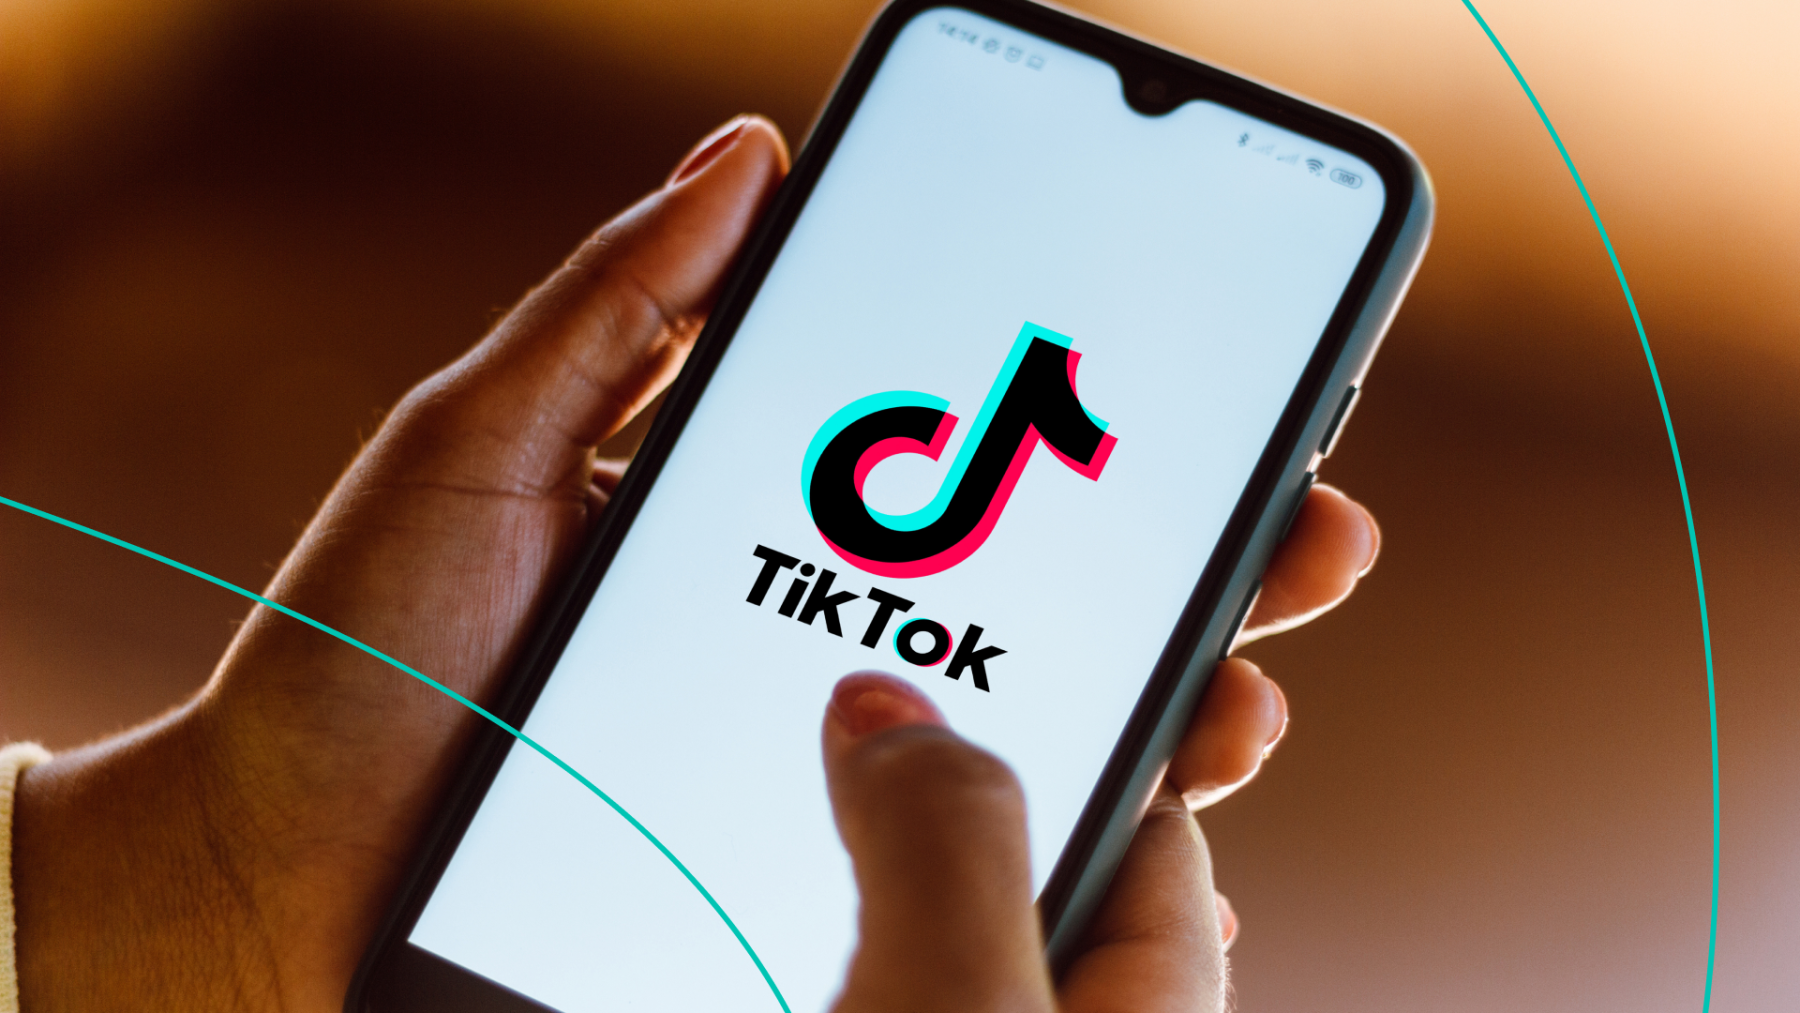 TikTok on a phone screen